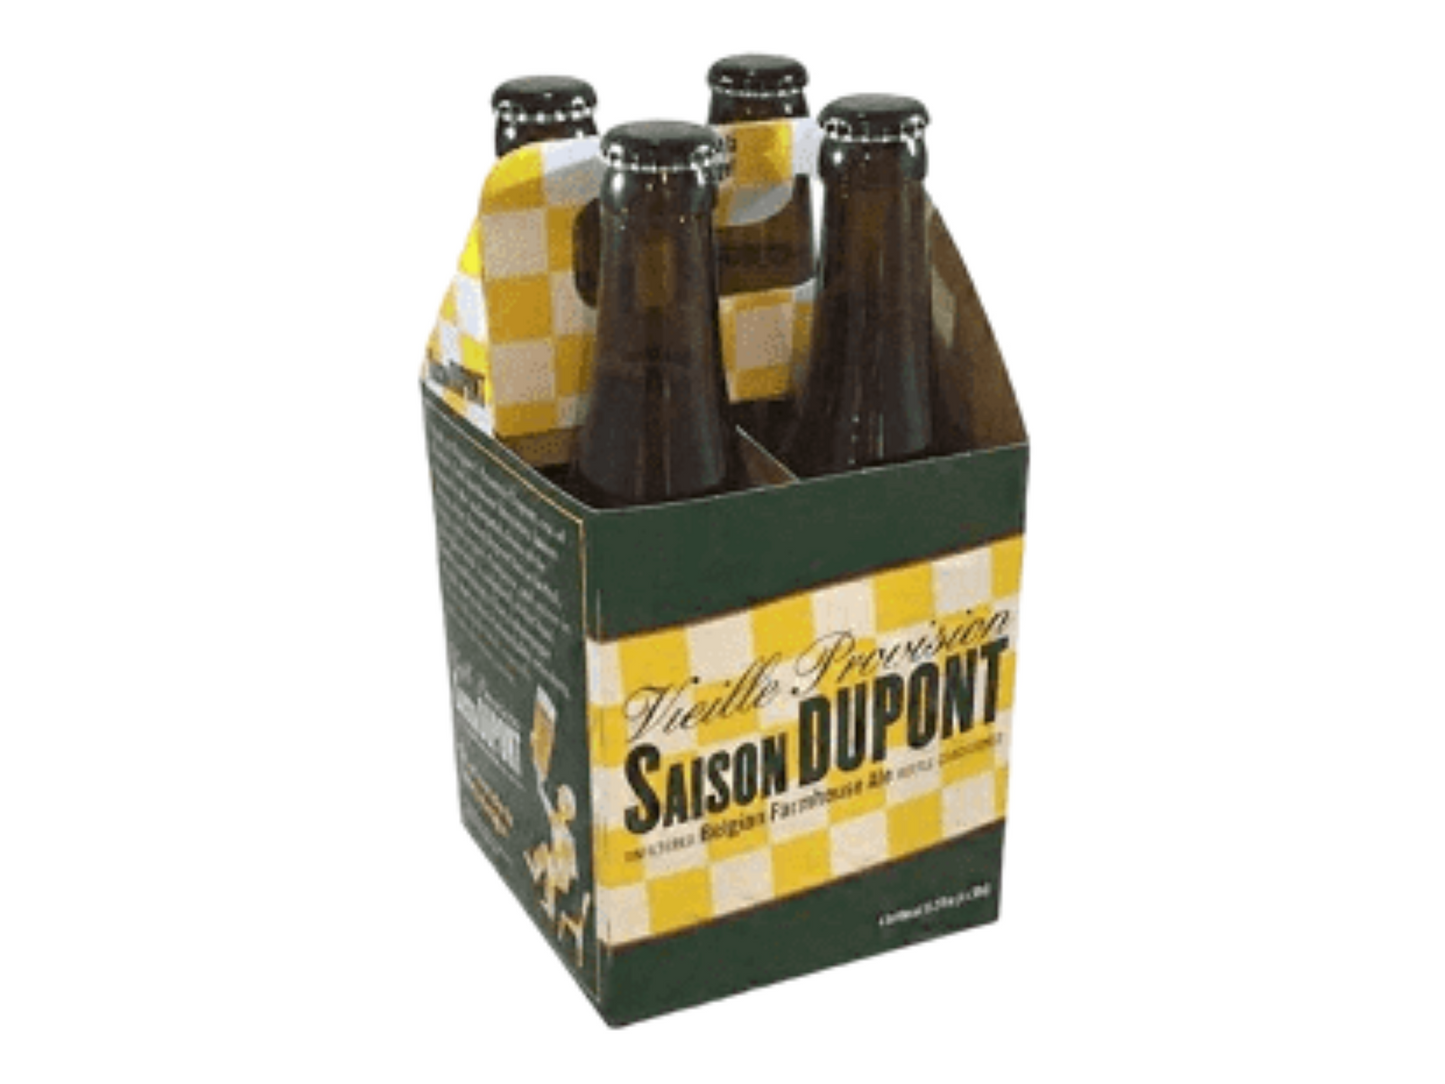 Brasserie Dupont Saison Dupont Blond Beer 4-Pack